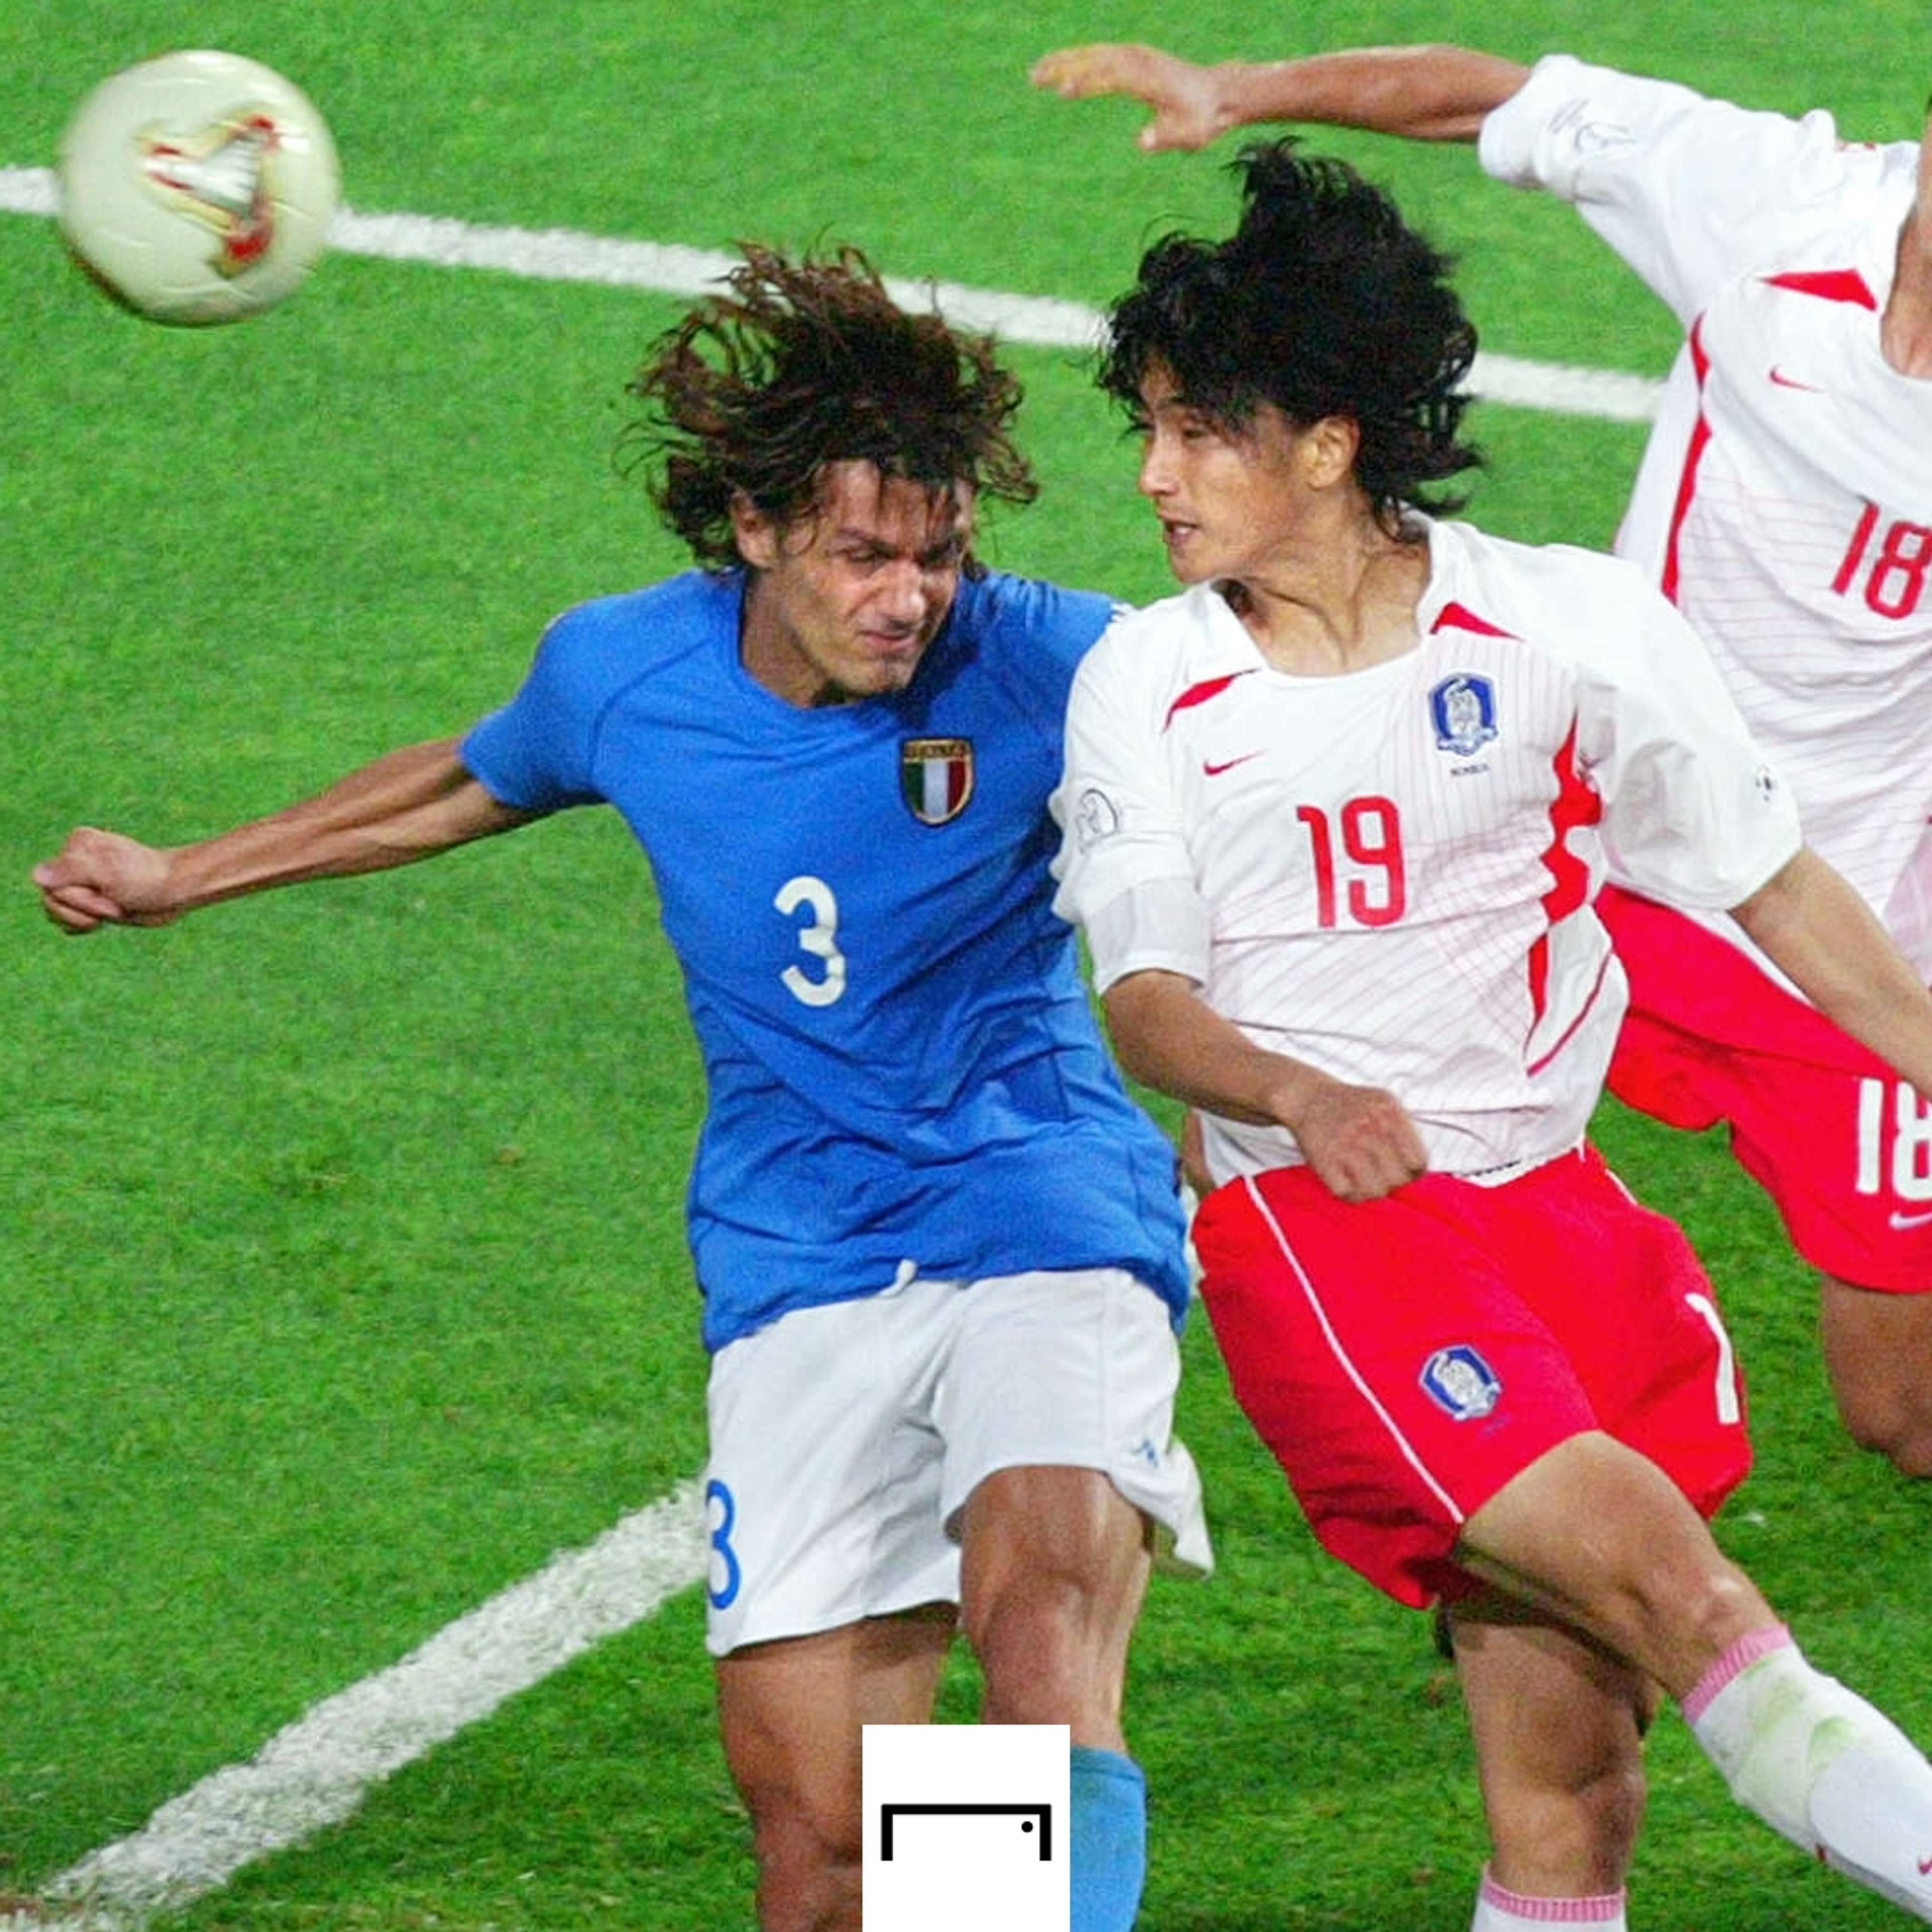 Ahn Jung-hwan Paolo Maldini South Korea Italy 2002 World Cup GFX